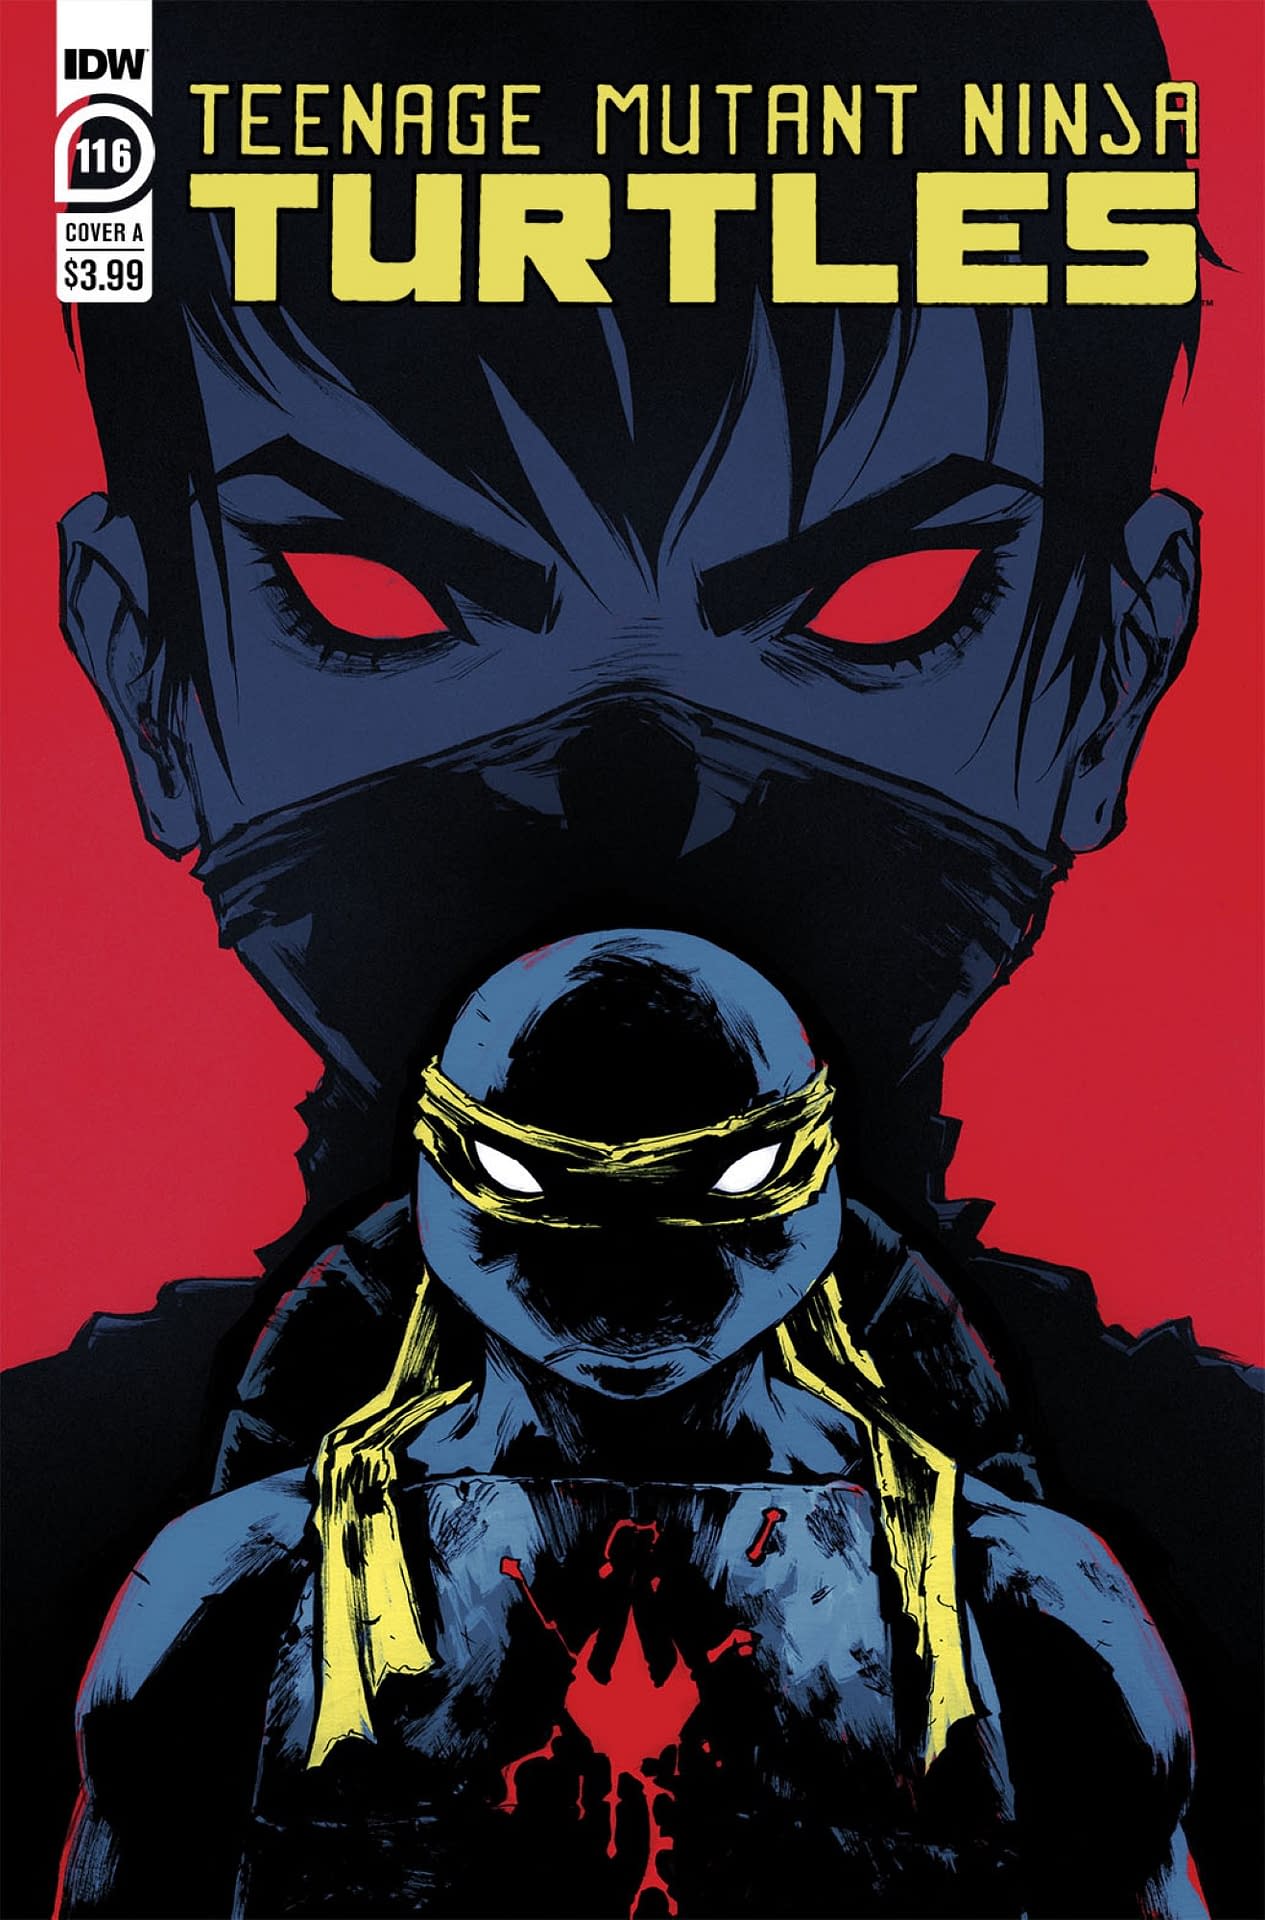 New Yellow-Masked Teenage Mutant Ninja Turtle Jennika Gets Her Own Comic -  IGN